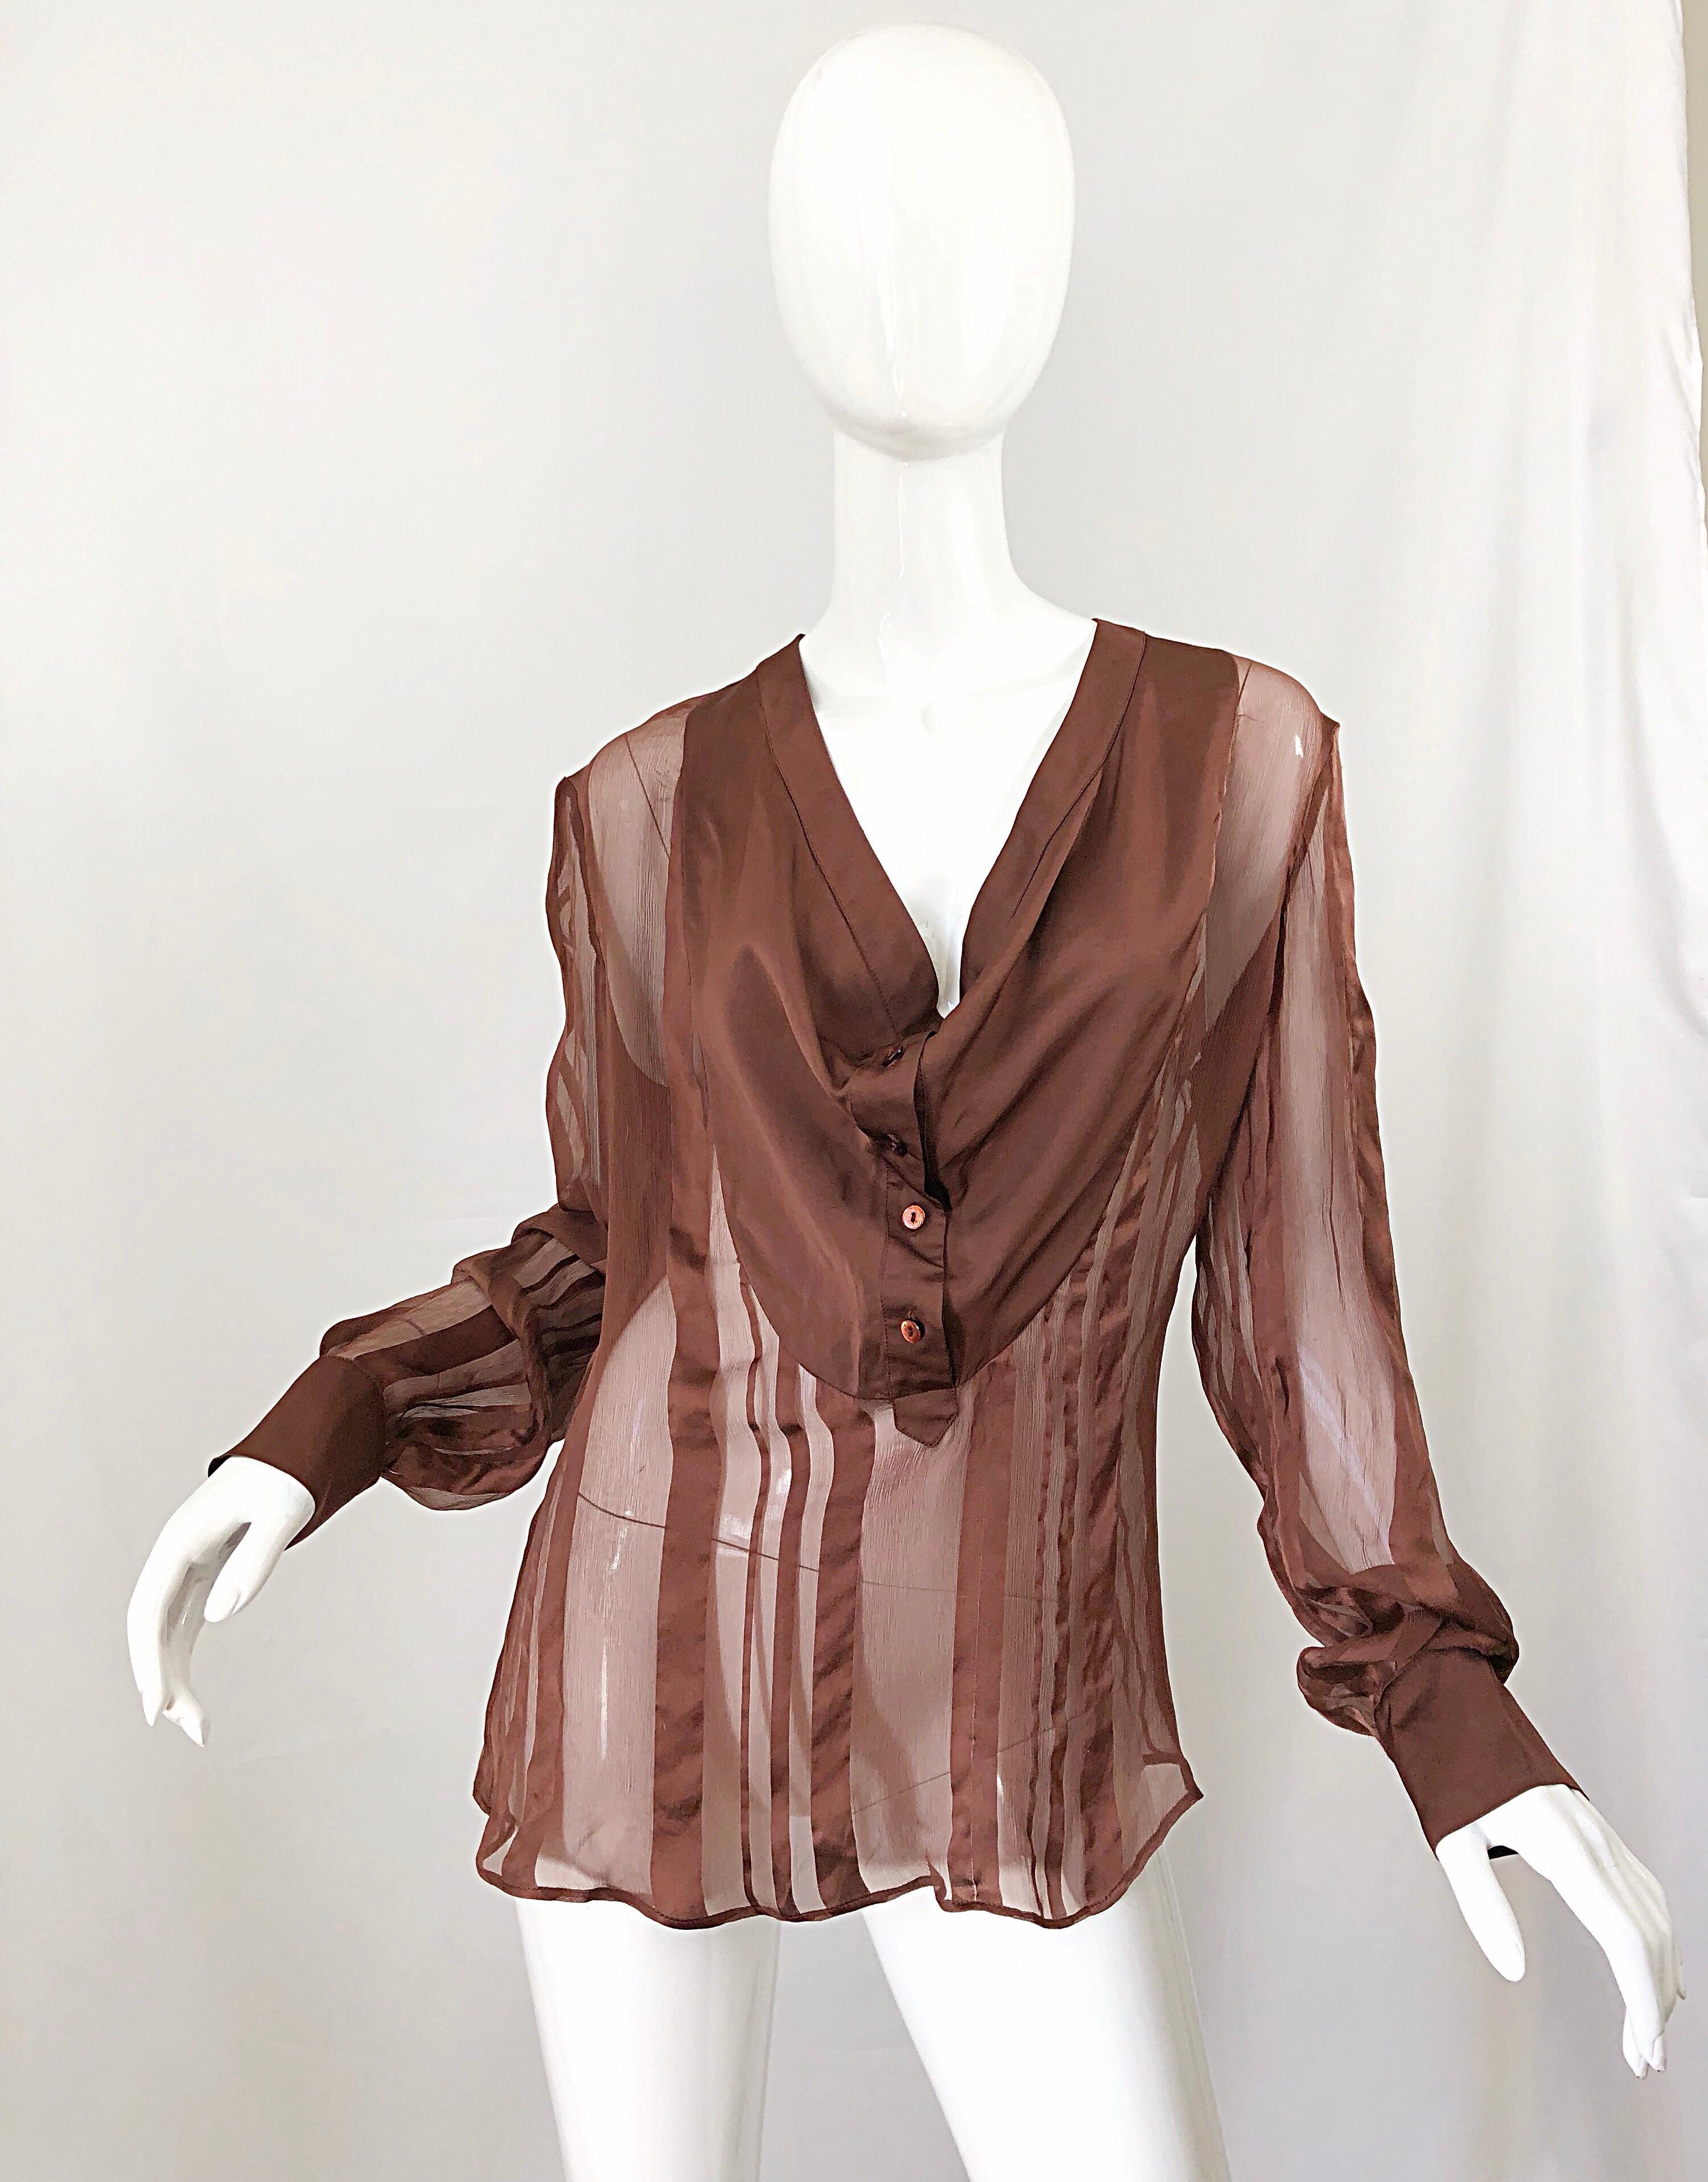 STELLA MCCARTNEY Rust Brown Silk Chiffon Avant Garde Semi Sheer Blouse Shirt Top 8